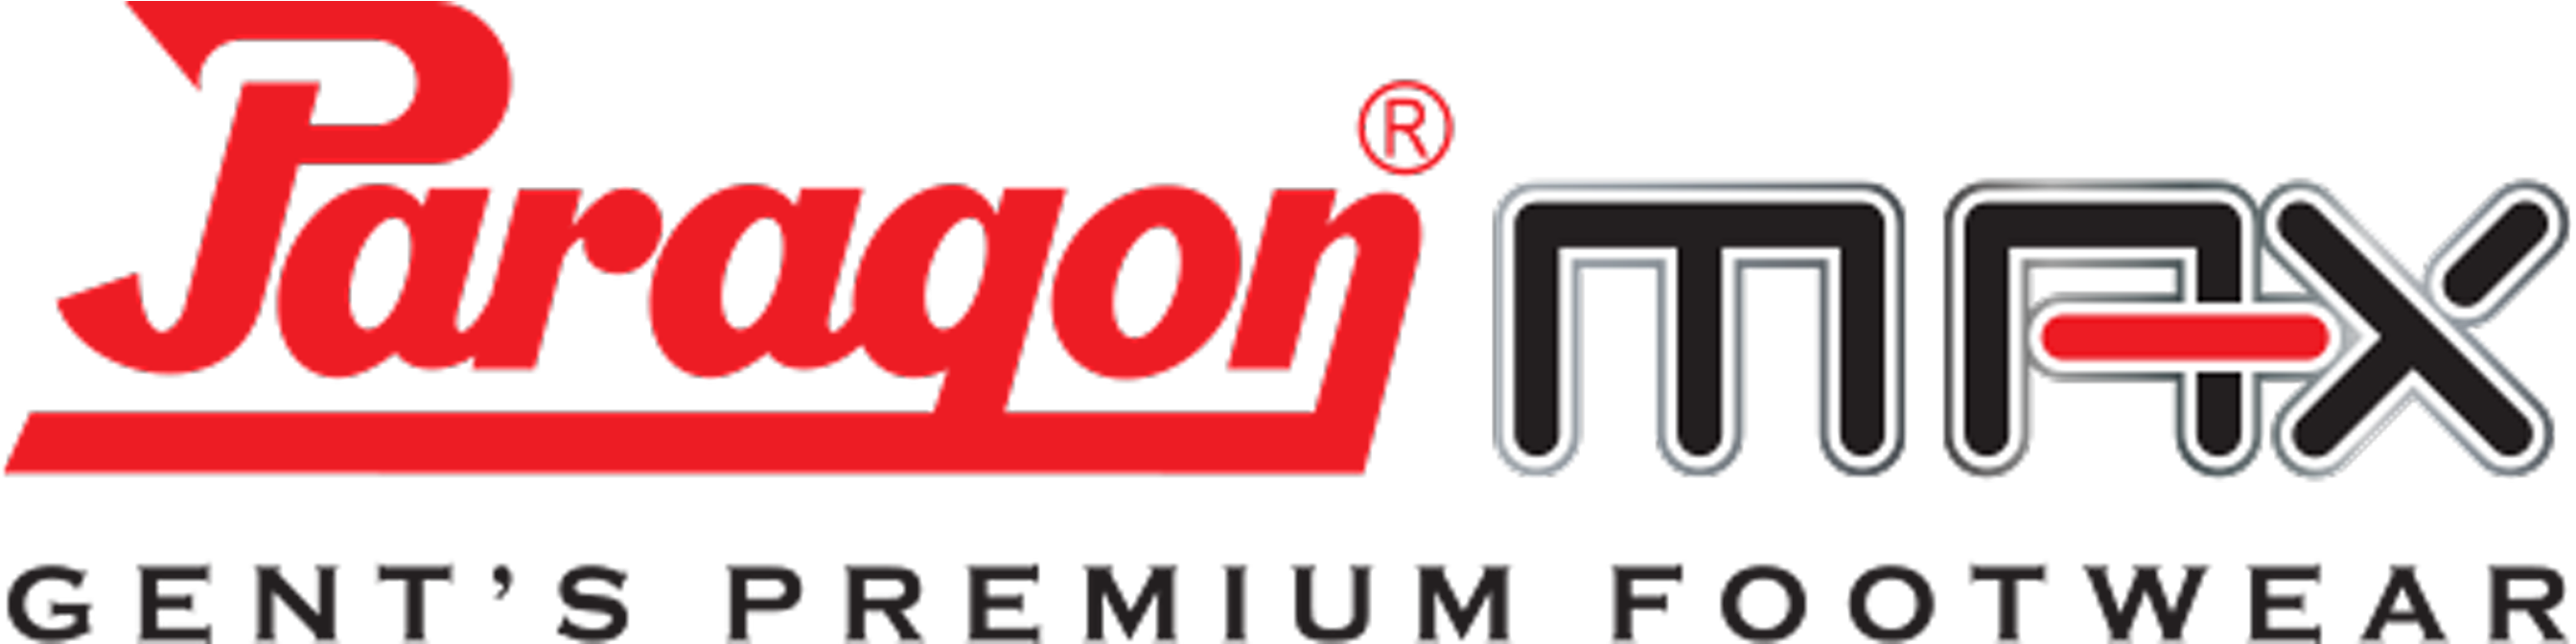 Paragon Video Productions Logo Black